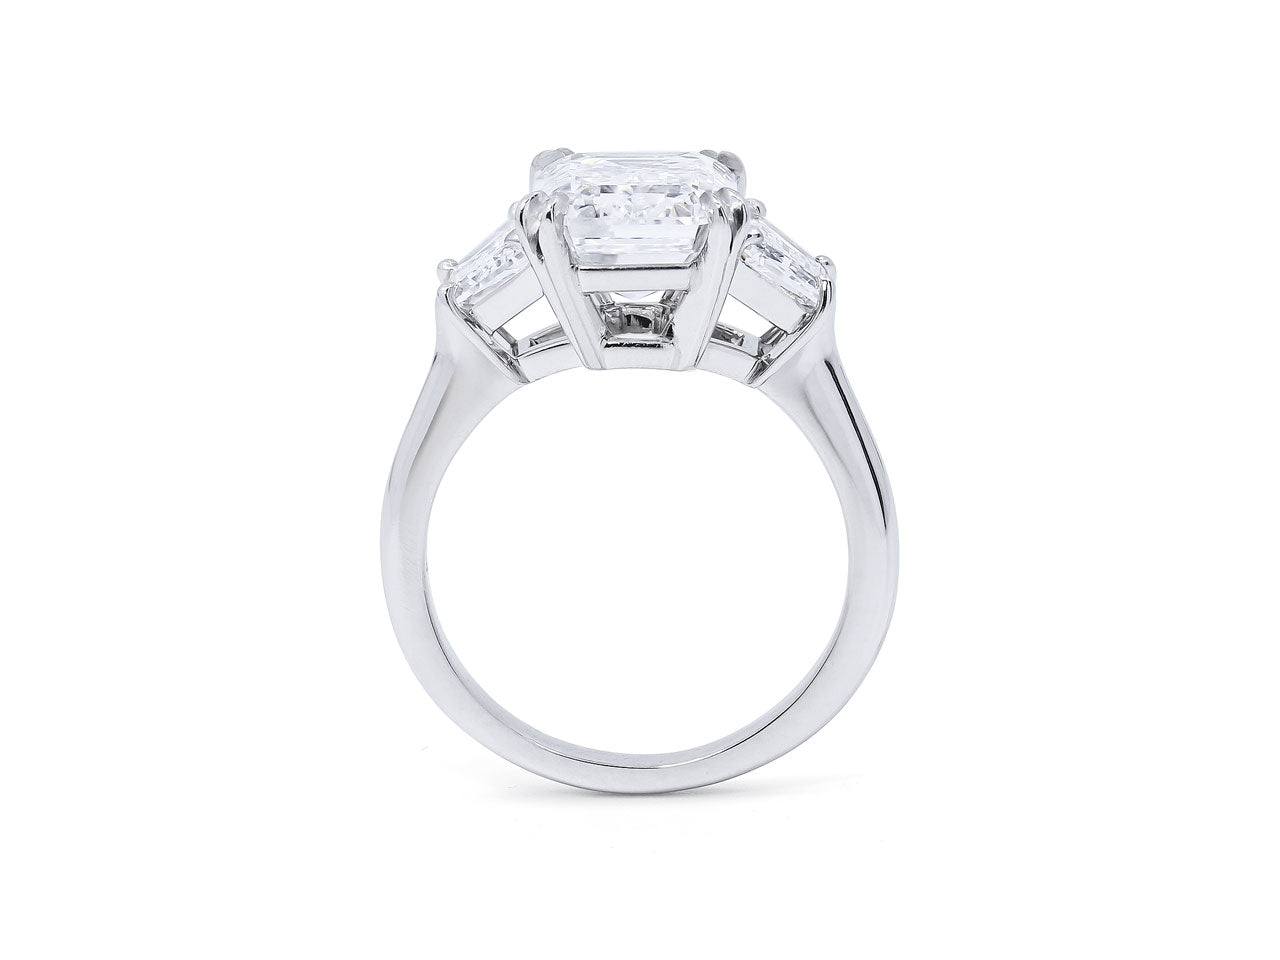 Harry Winston Emerald Cut Diamond Ring, 4.33 Carat F/VVS2, in Platinum